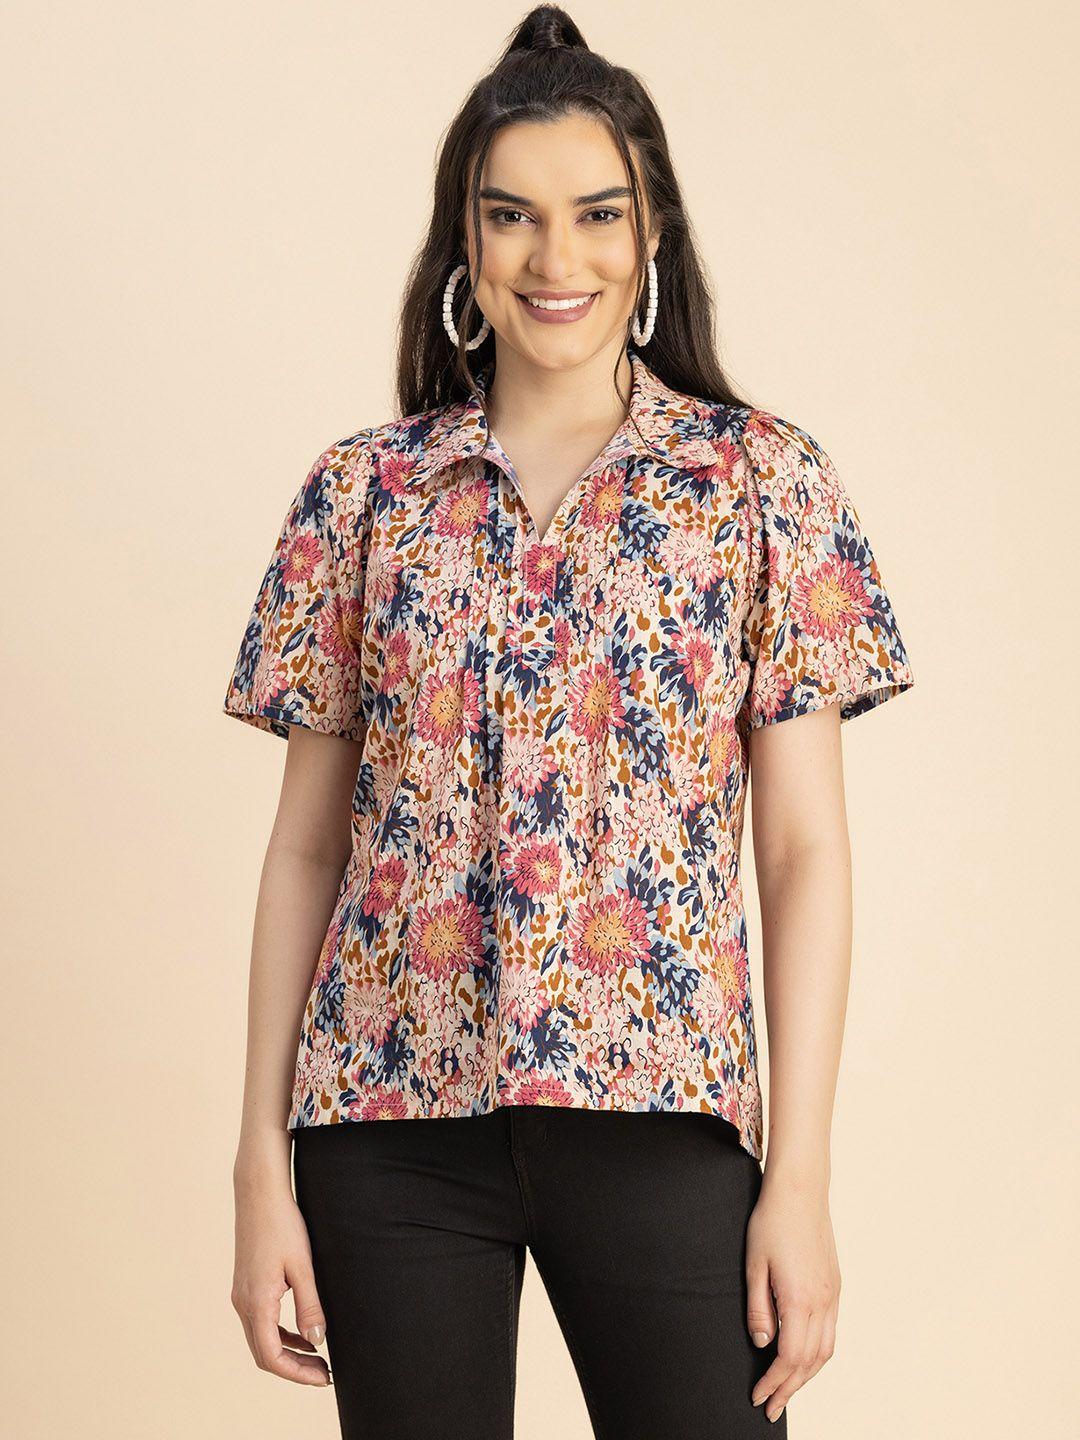 moomaya shirt collar short sleeves floral print cotton top